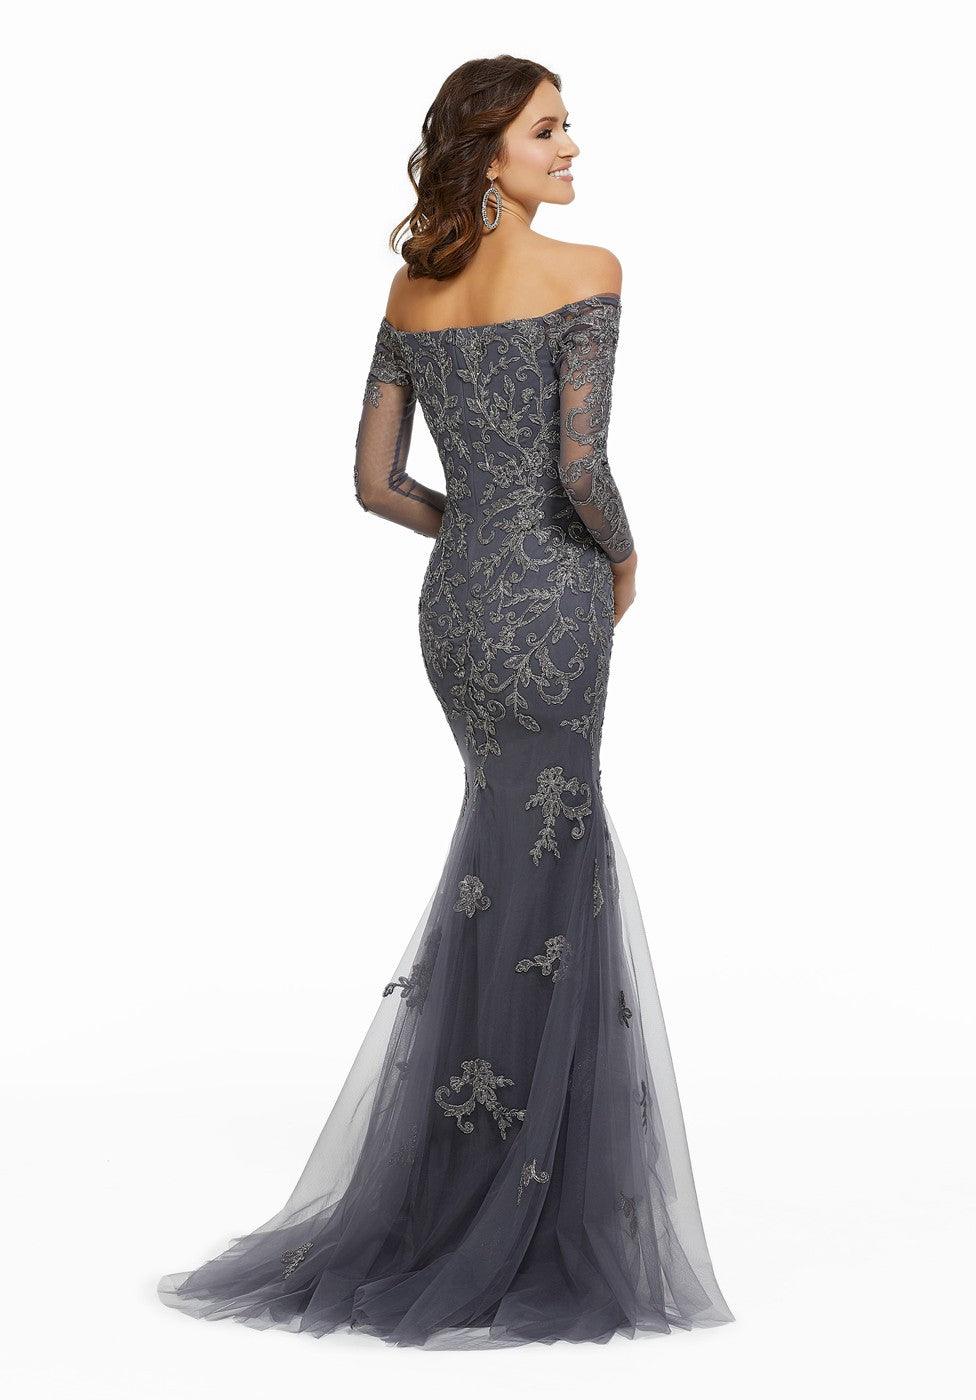 MGNY Madeline Gardner New York 72015 Long Formal Evening Dress